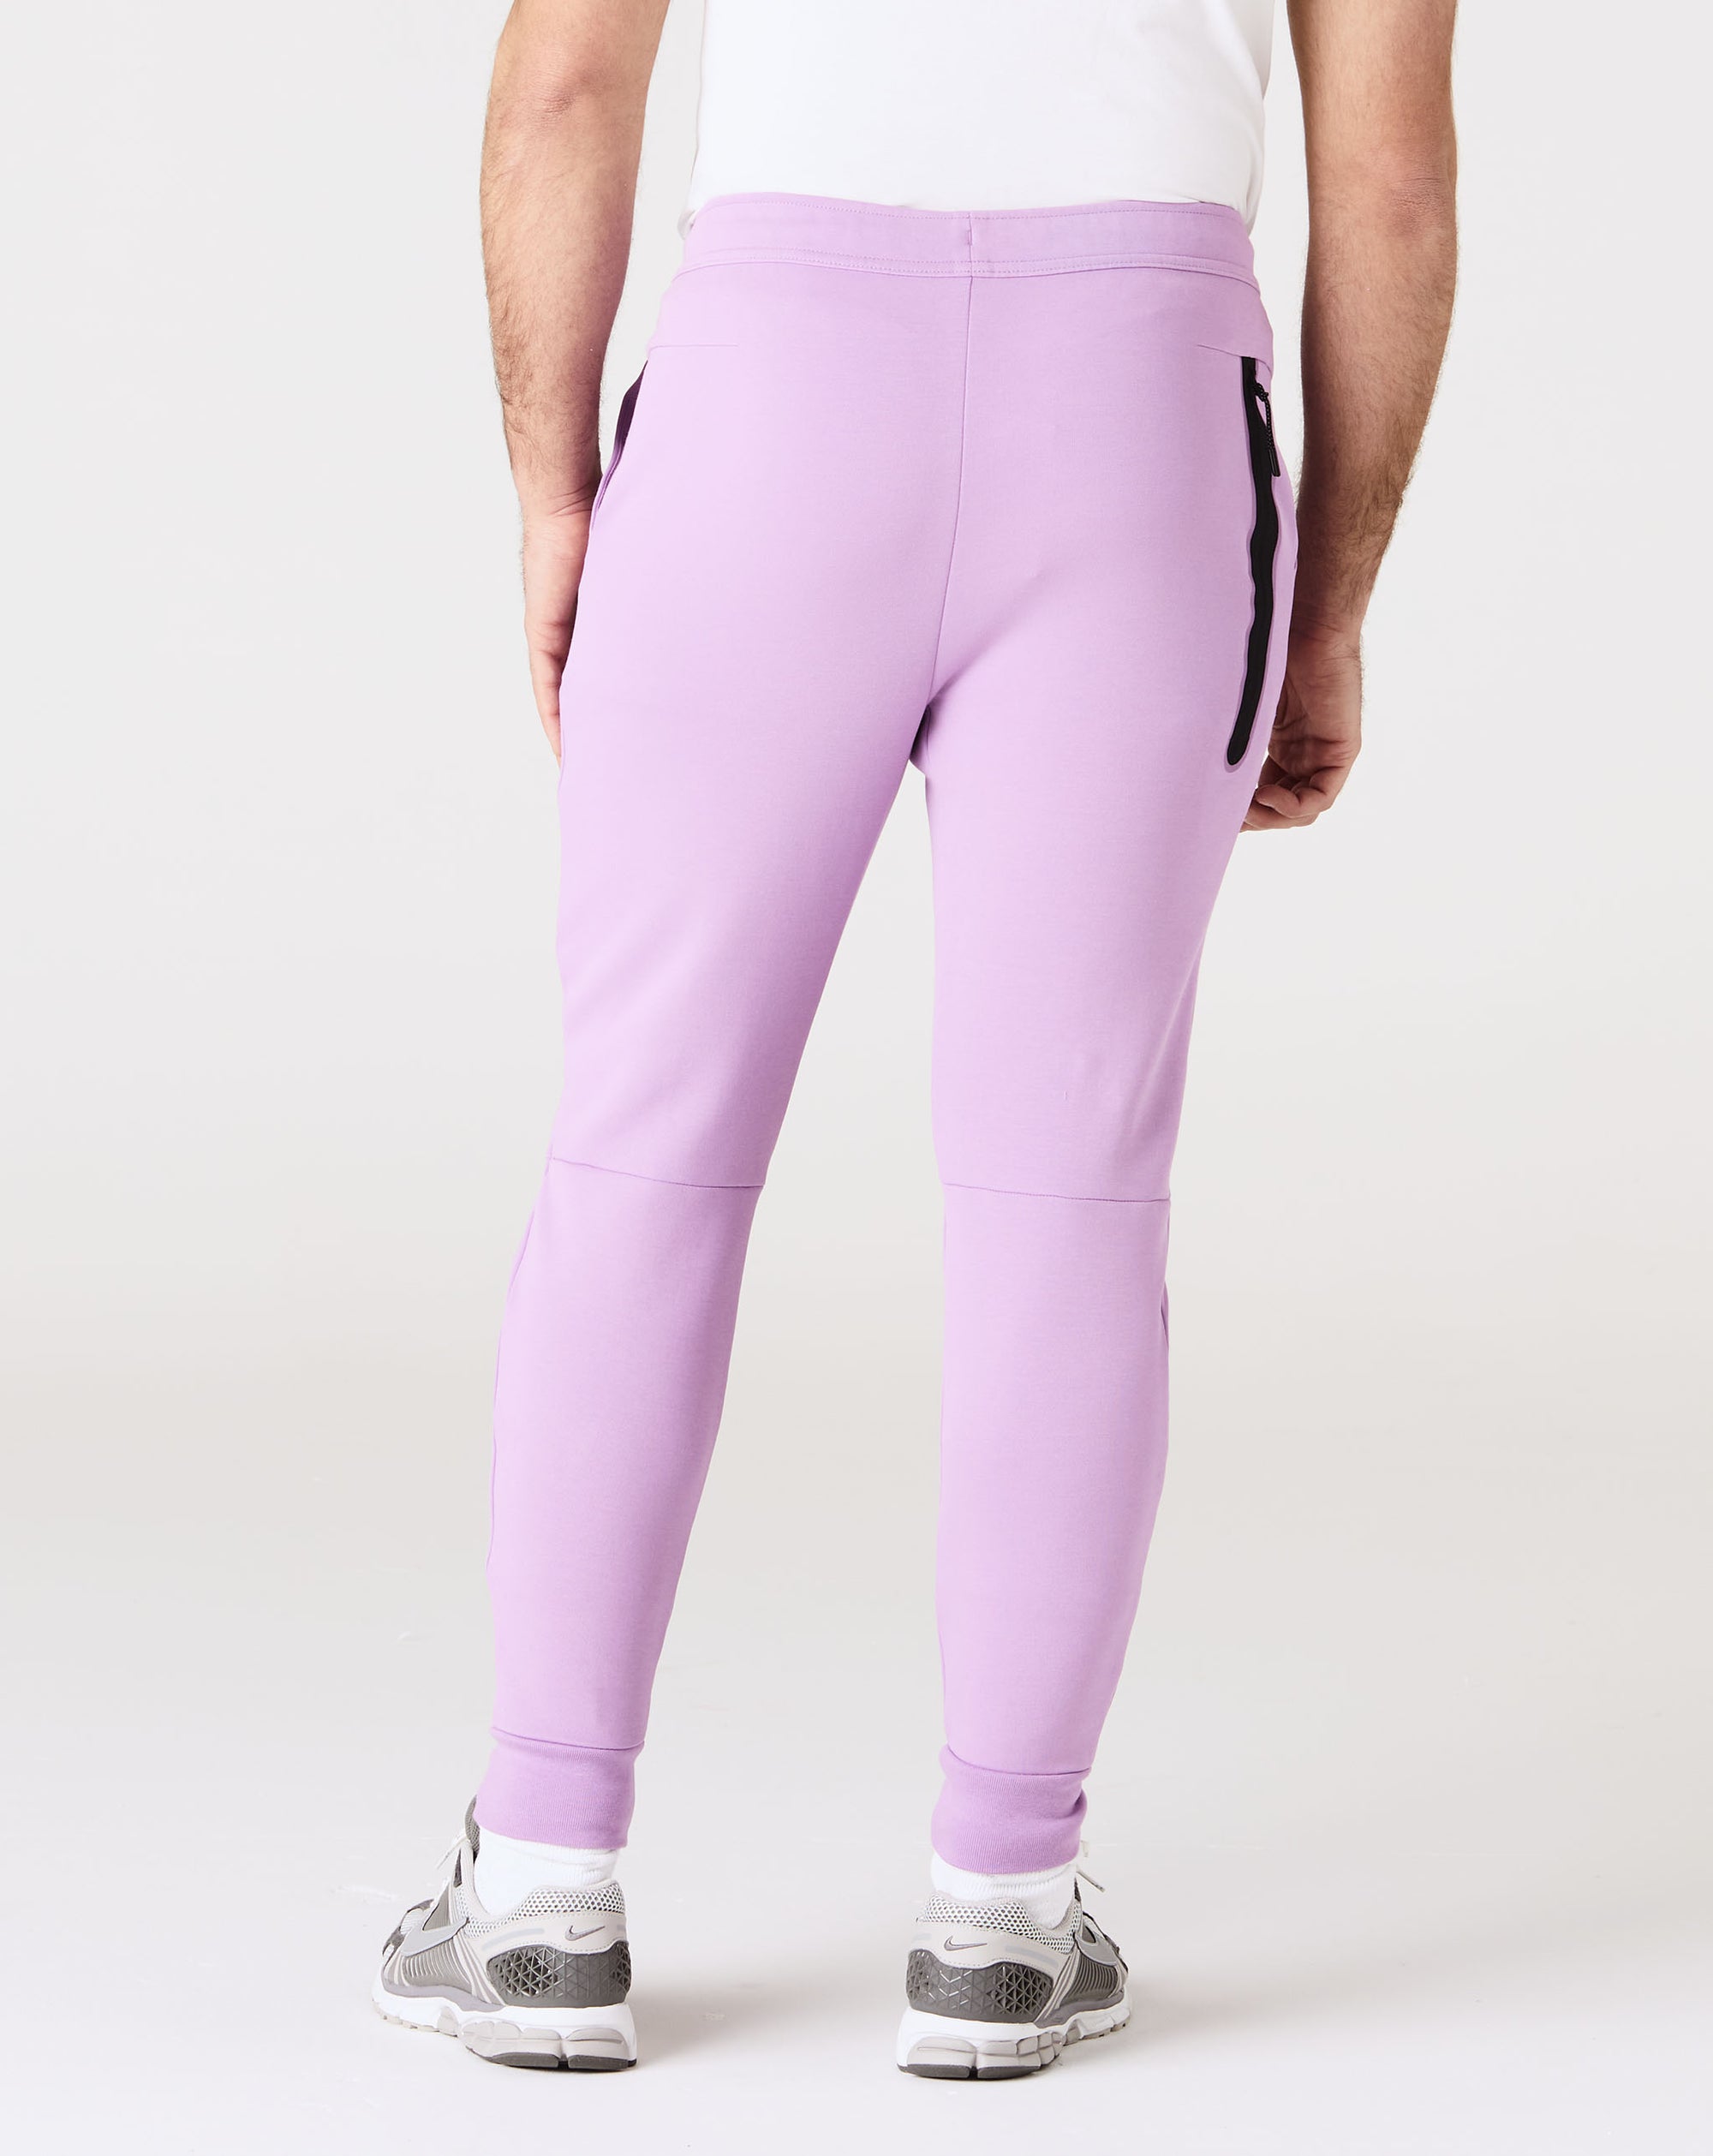 Nike Tech Fleece Pants - Light Thistle/Light Thistle/White